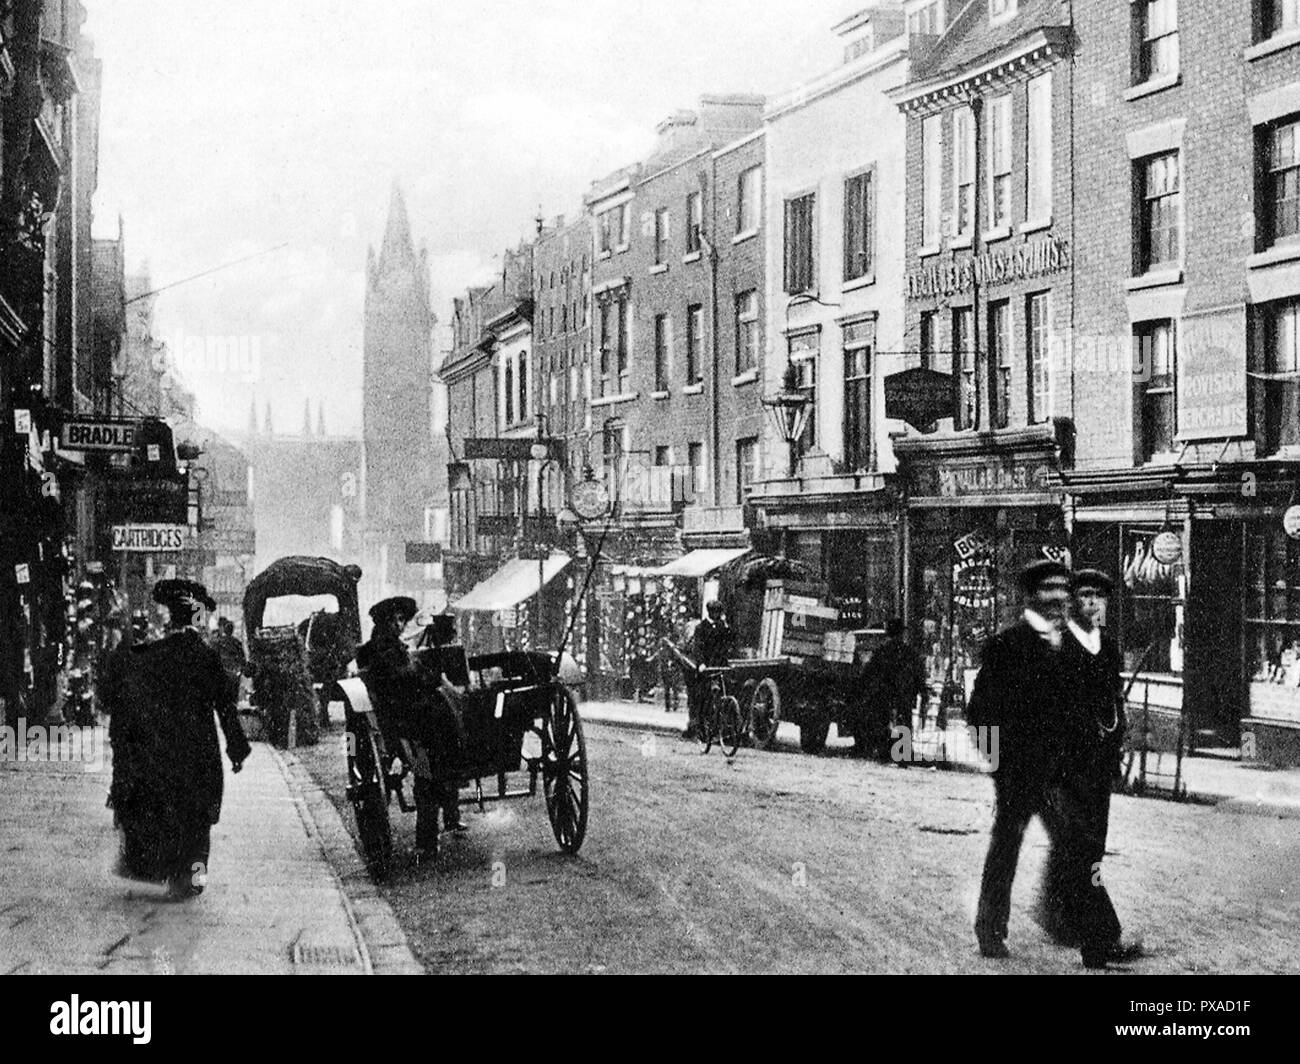 Pride Hill, Shrewsbury early 1900s Stock Photo